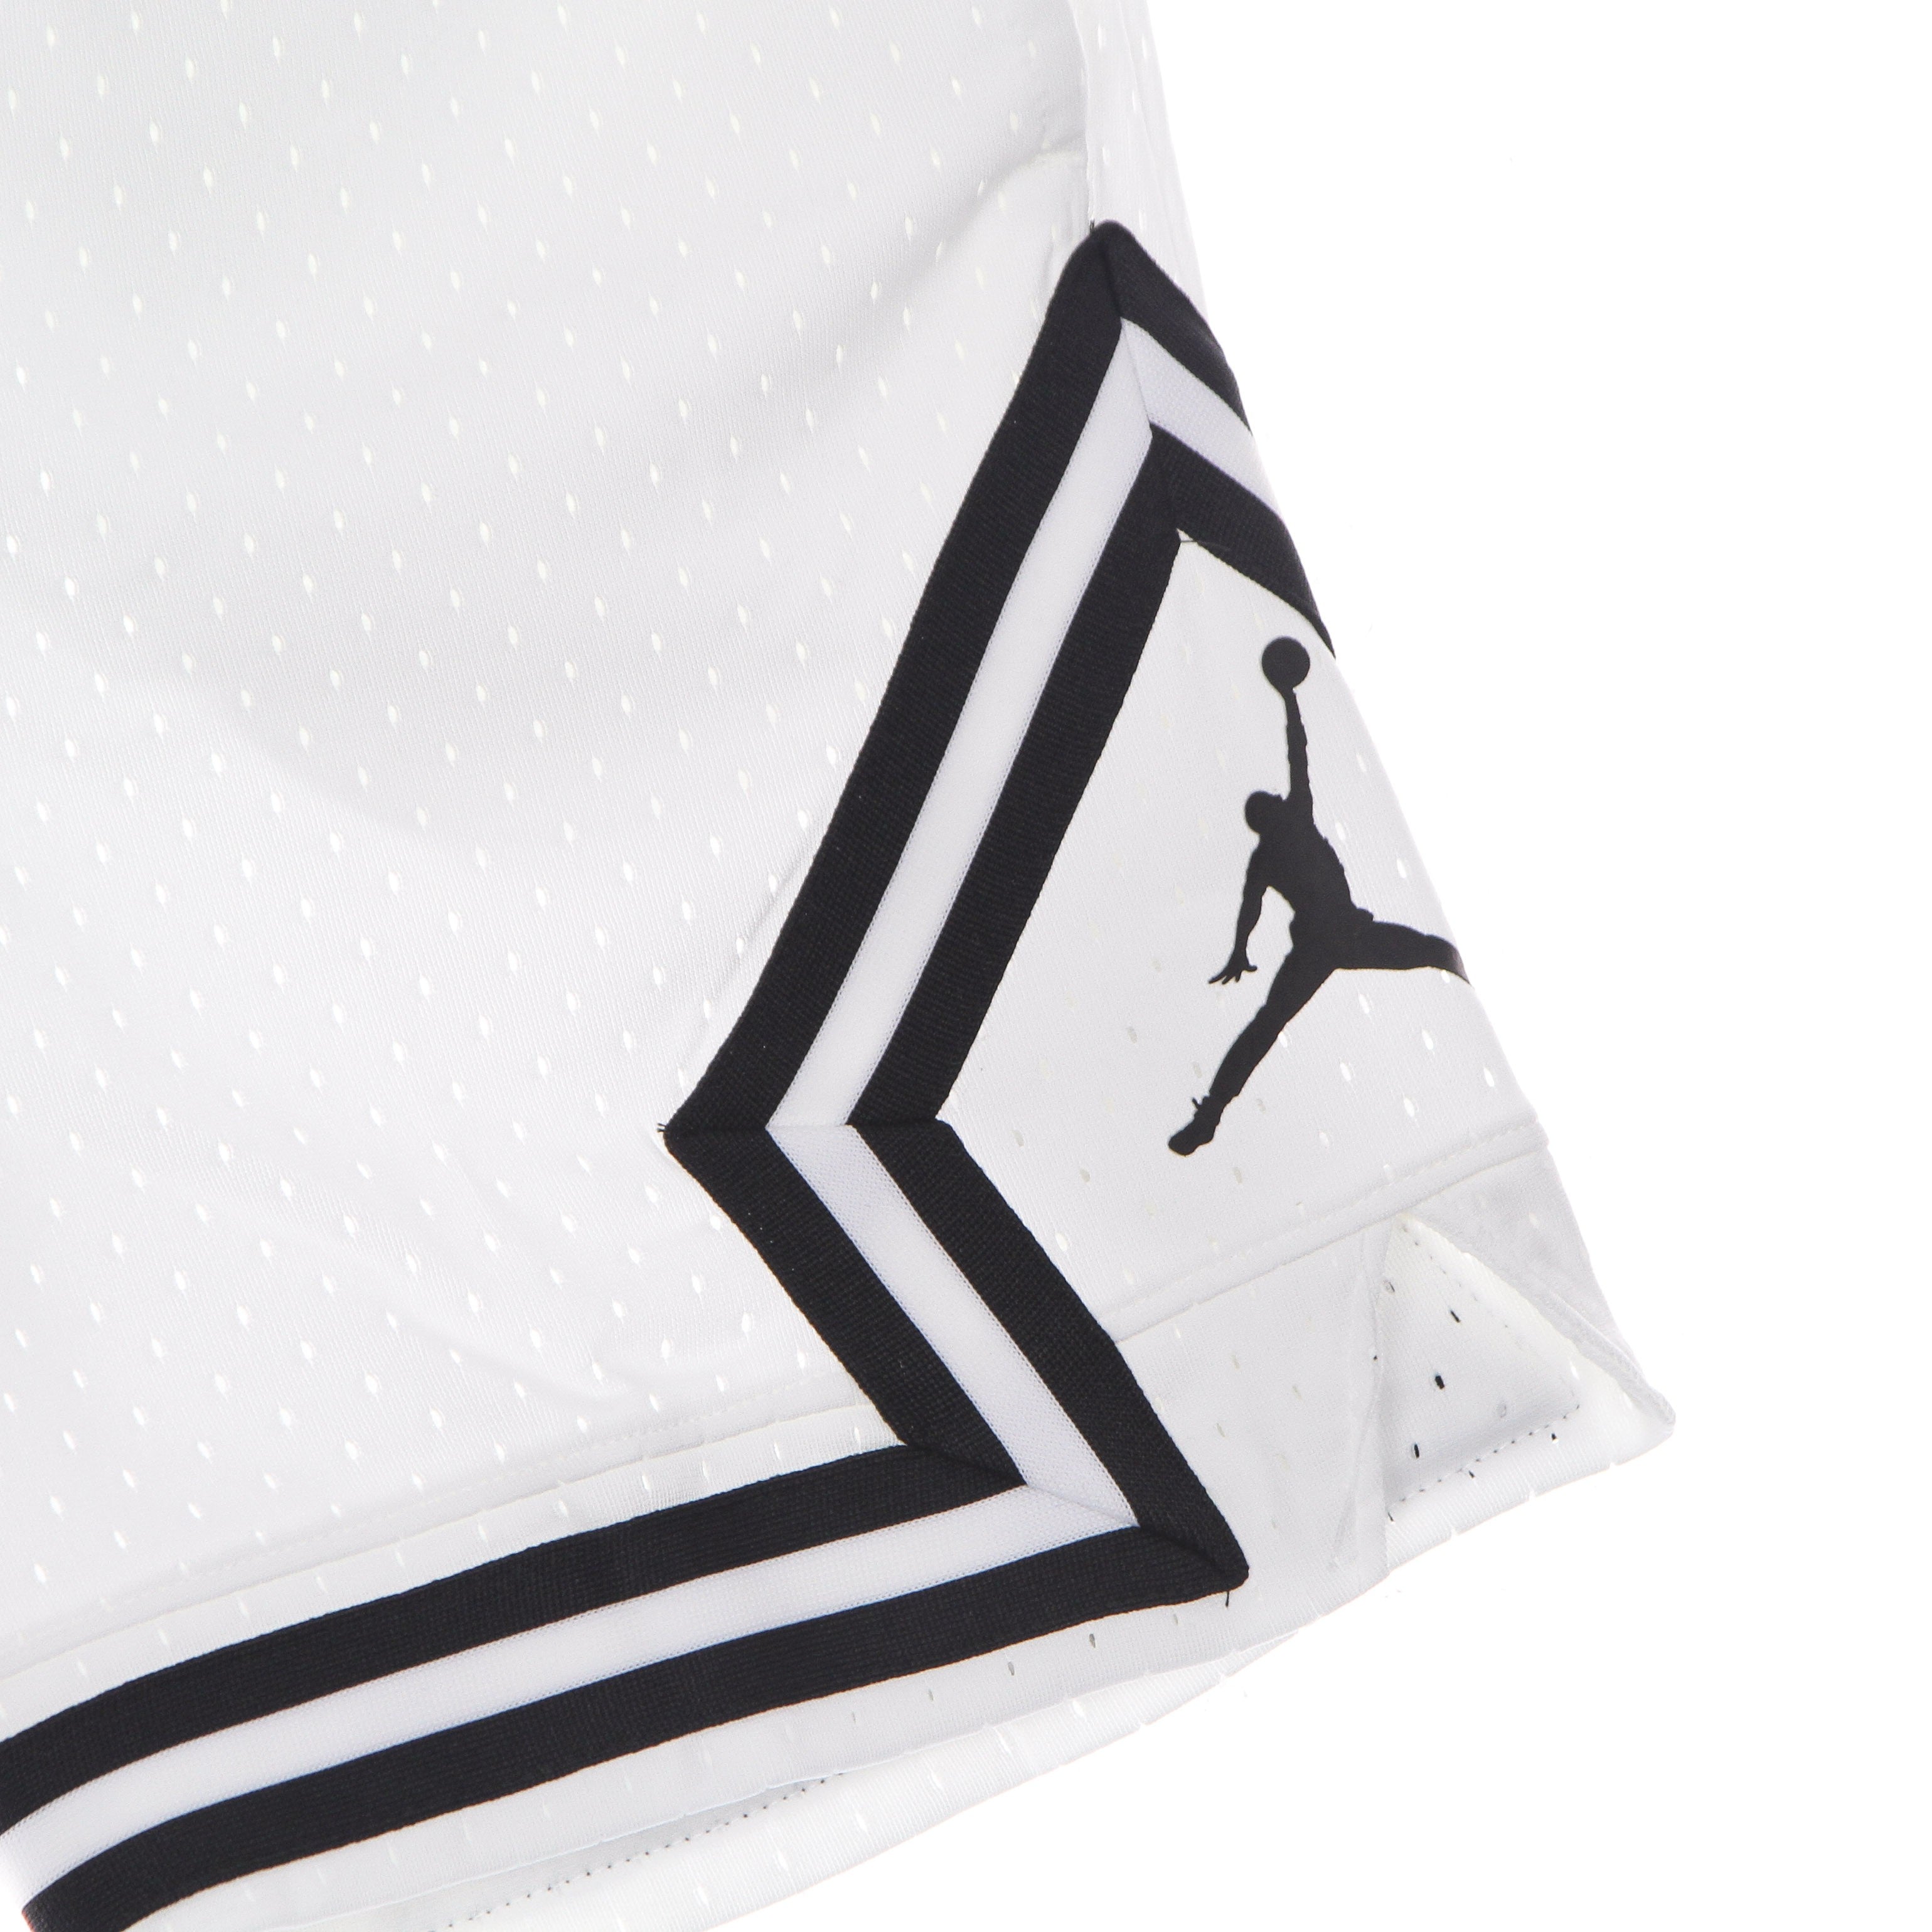 Men's Basketball Shorts Dri Fit Diamond Short White/white/black/black